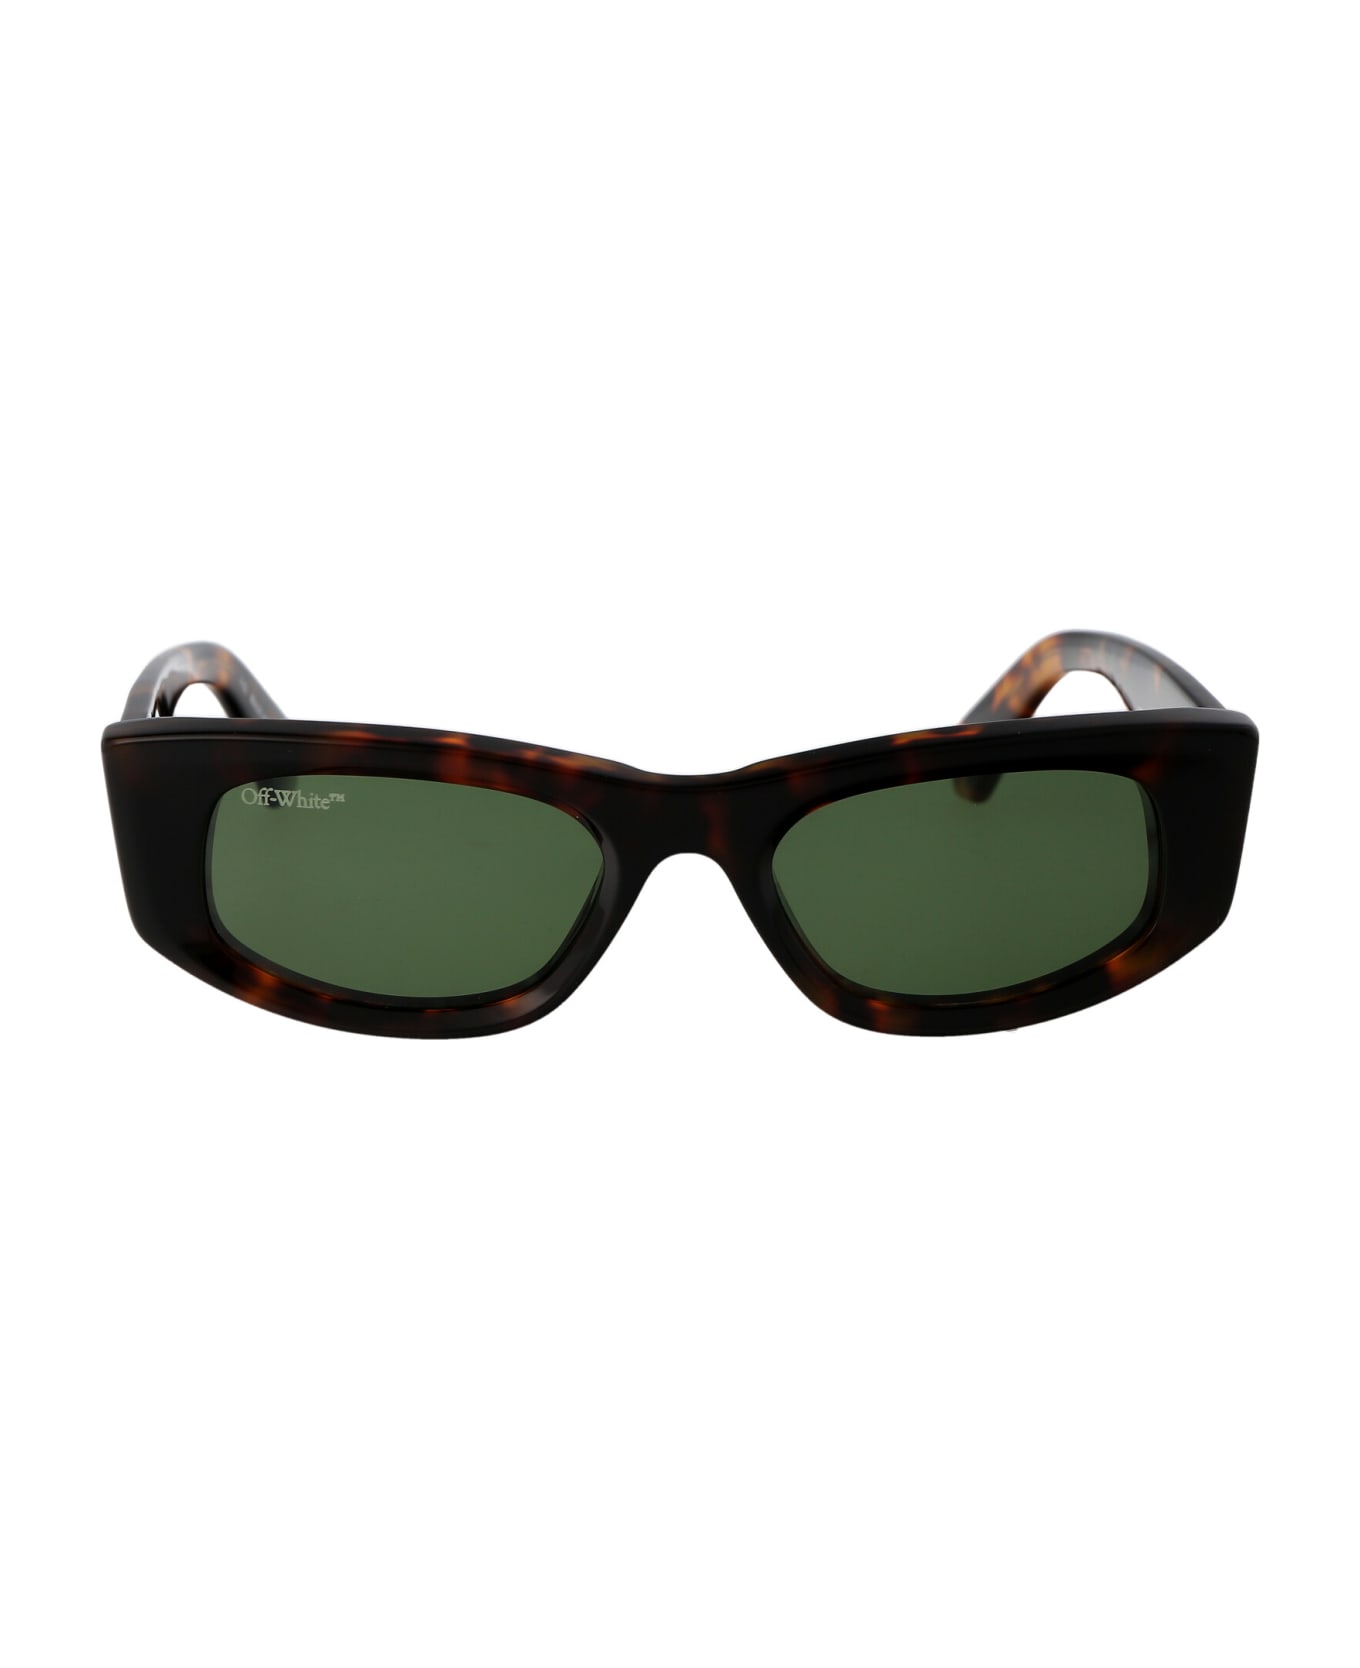 Off-White Matera Sunglasses - 6055 HAVANA サングラス